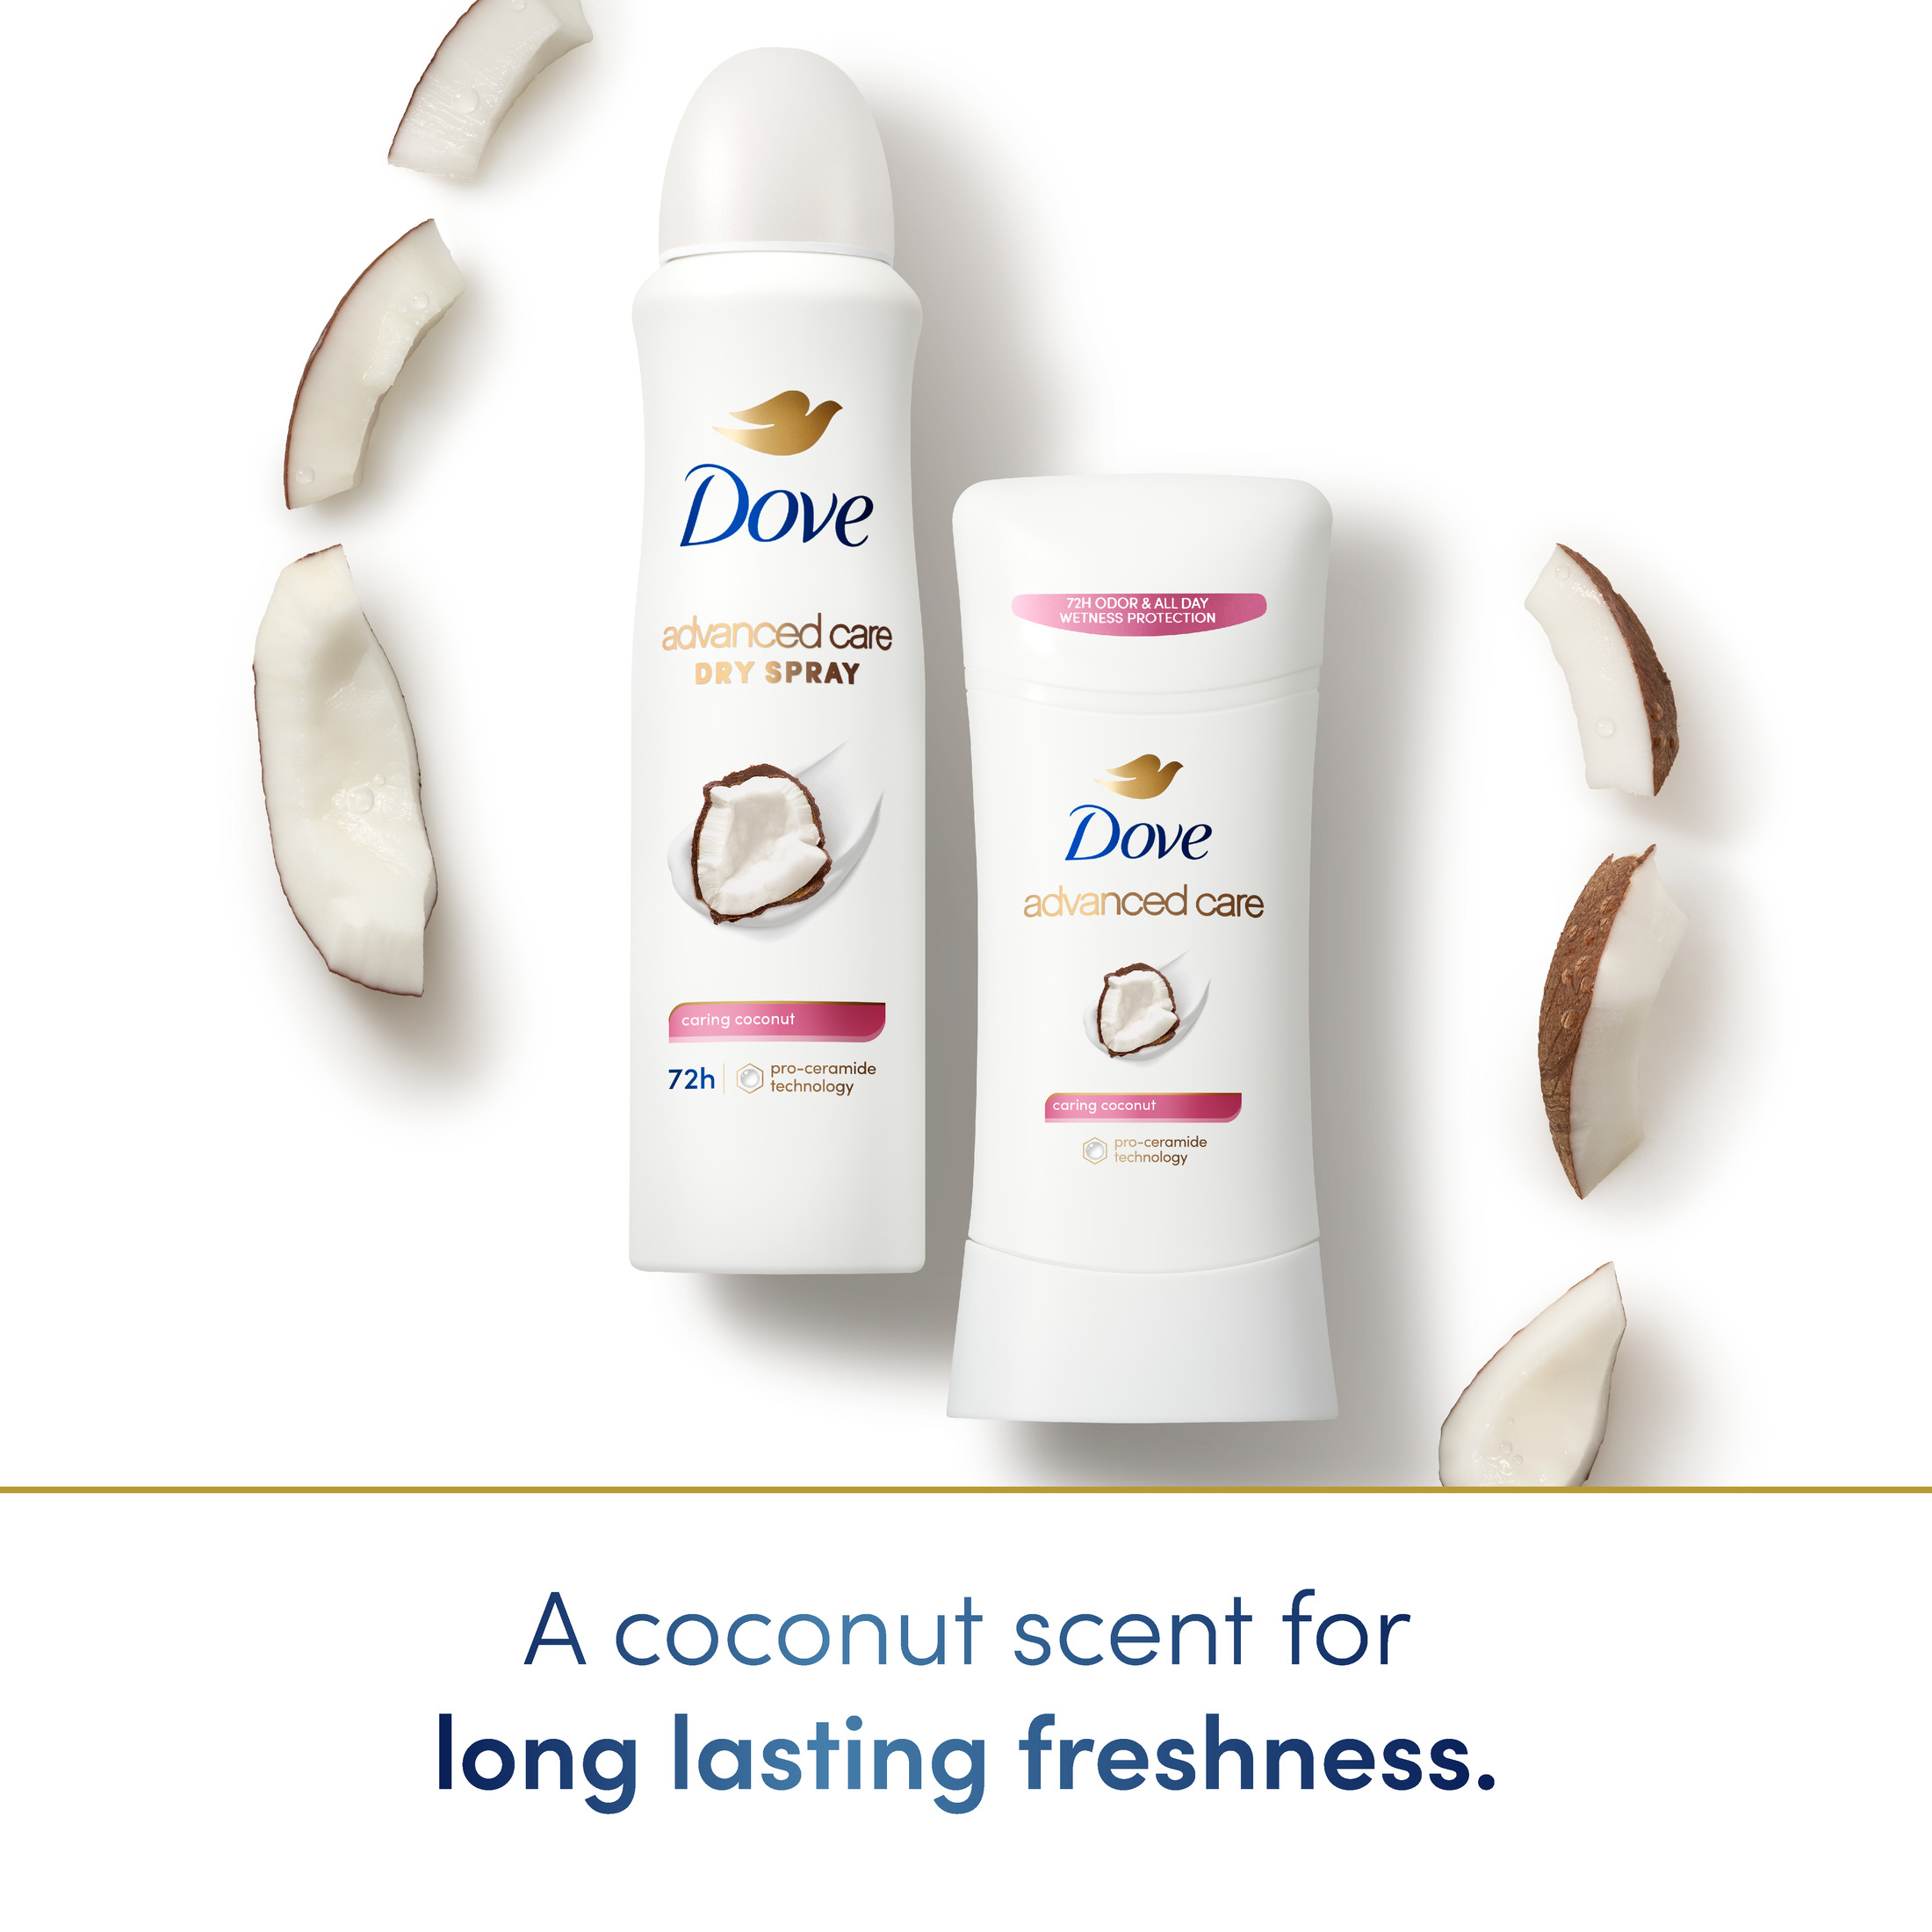 Dove Advanced Care Long Lasting Women's Antiperspirant Deodorant Stick, Caring Coconut, 2.6 oz - image 5 of 9